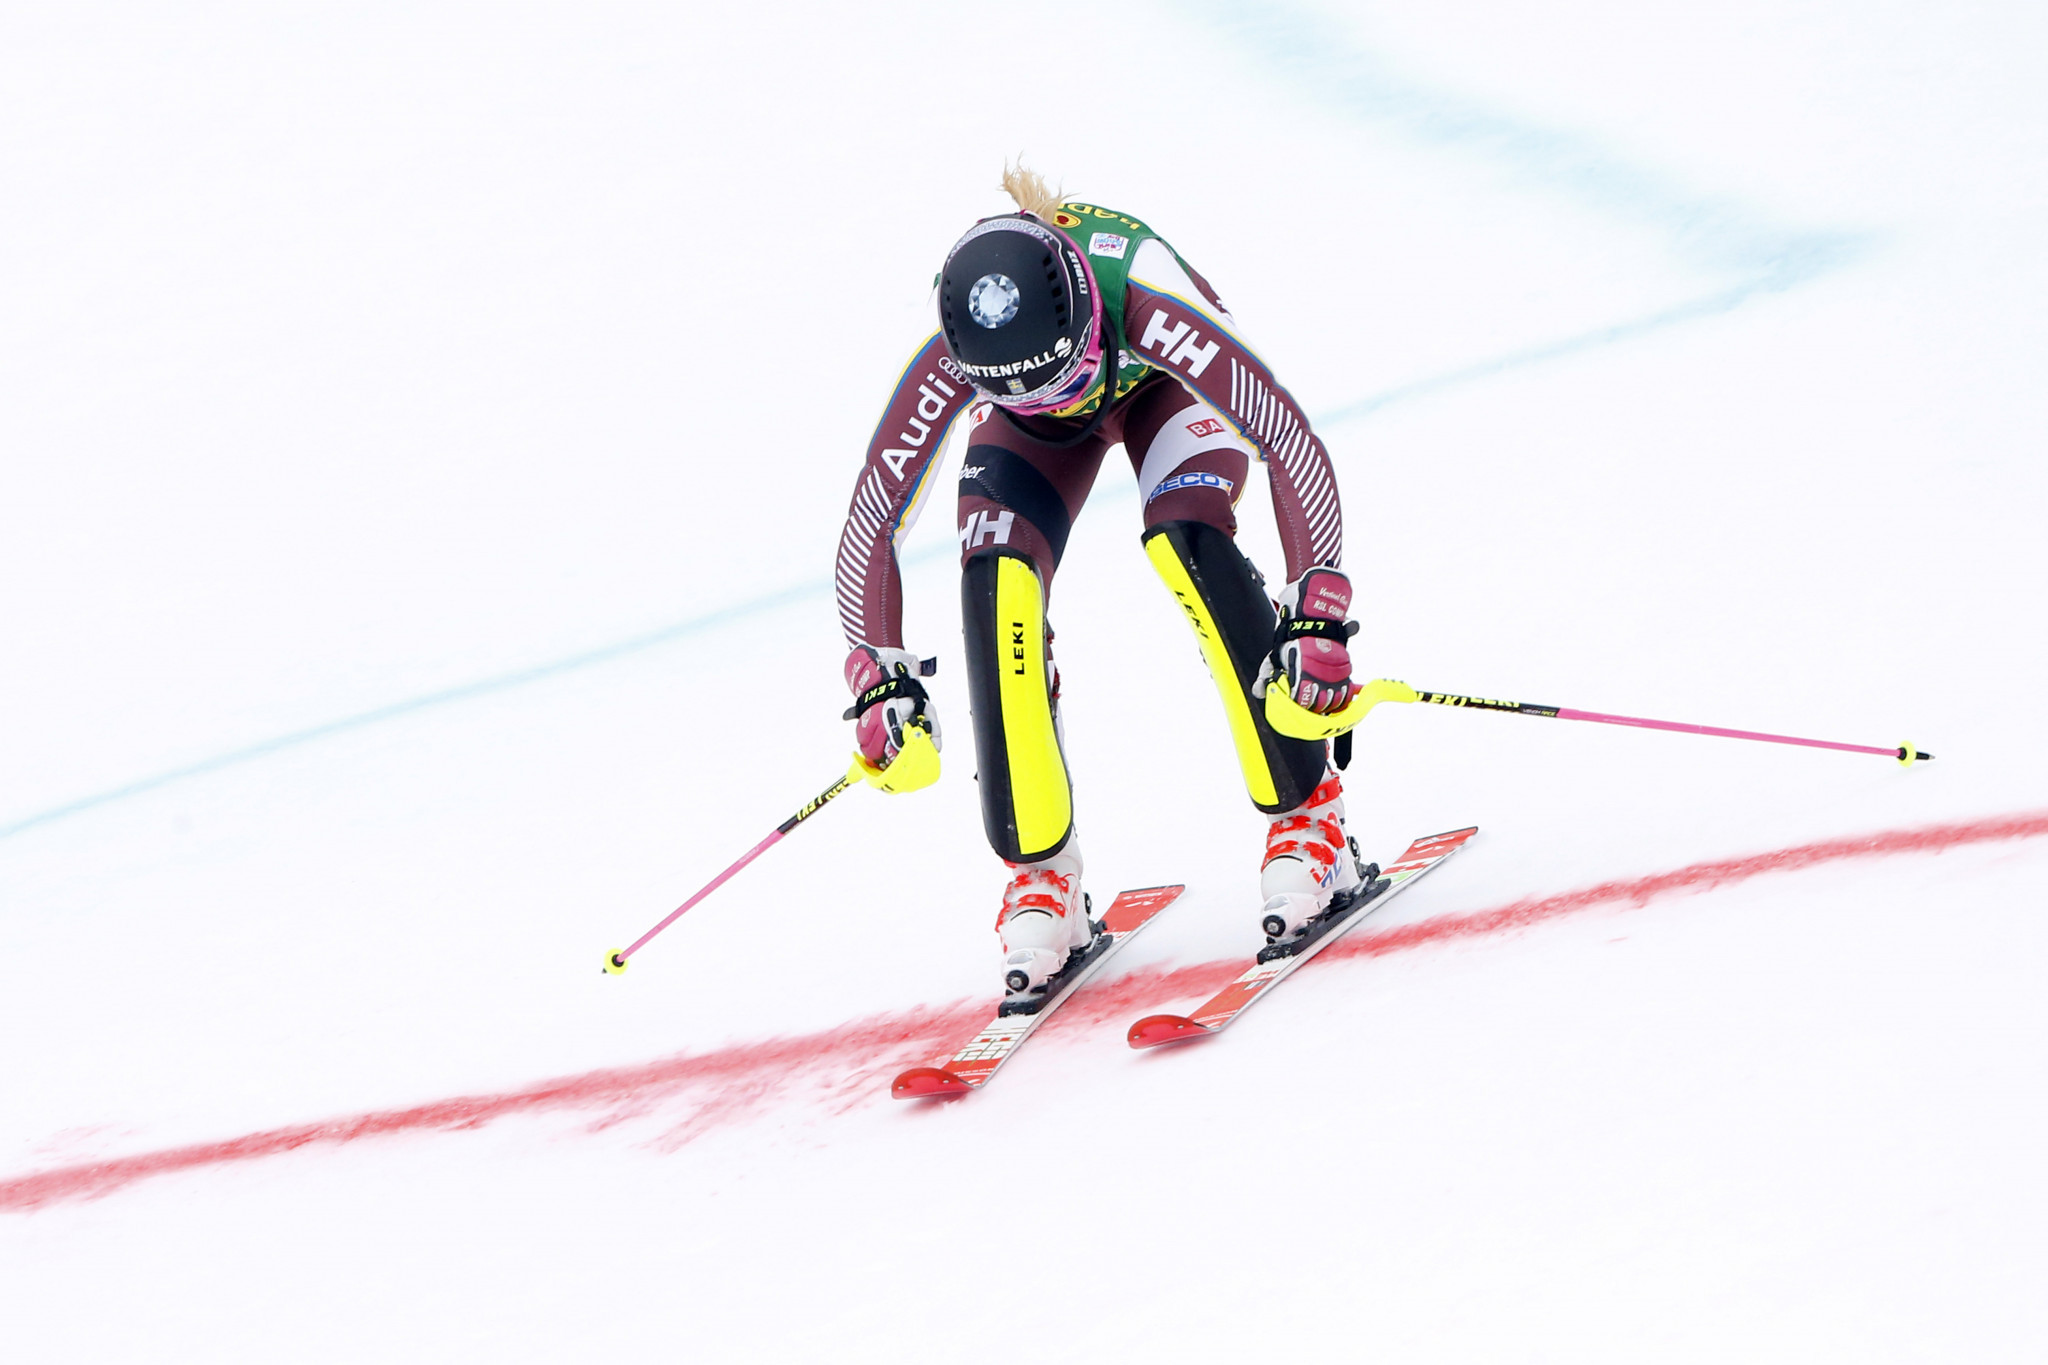 Frida Hansdotter won the women's slalom event in Flachau last year ©Getty Images